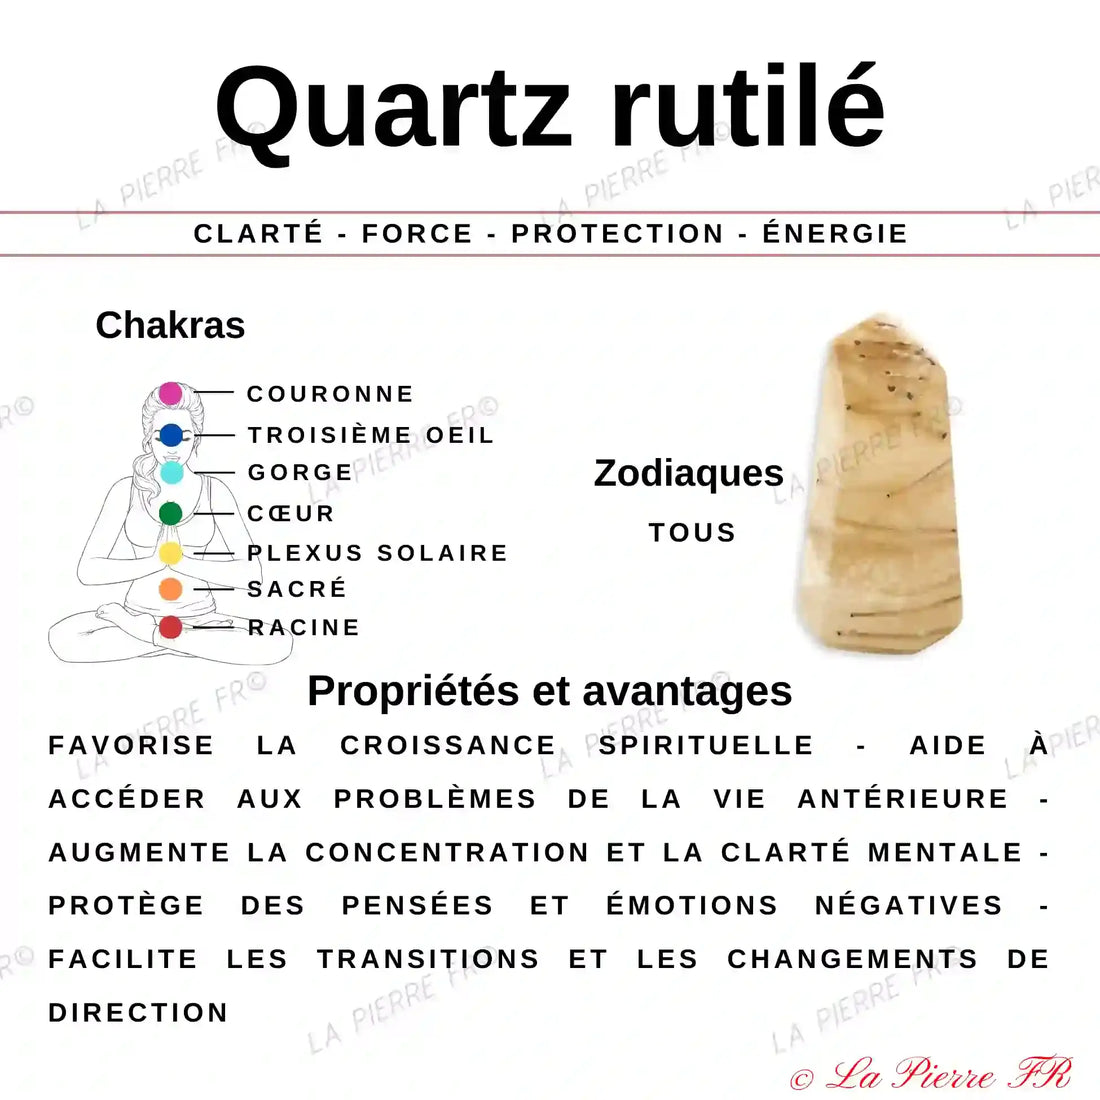 Bracelet pierre naturelle Quartz rutile